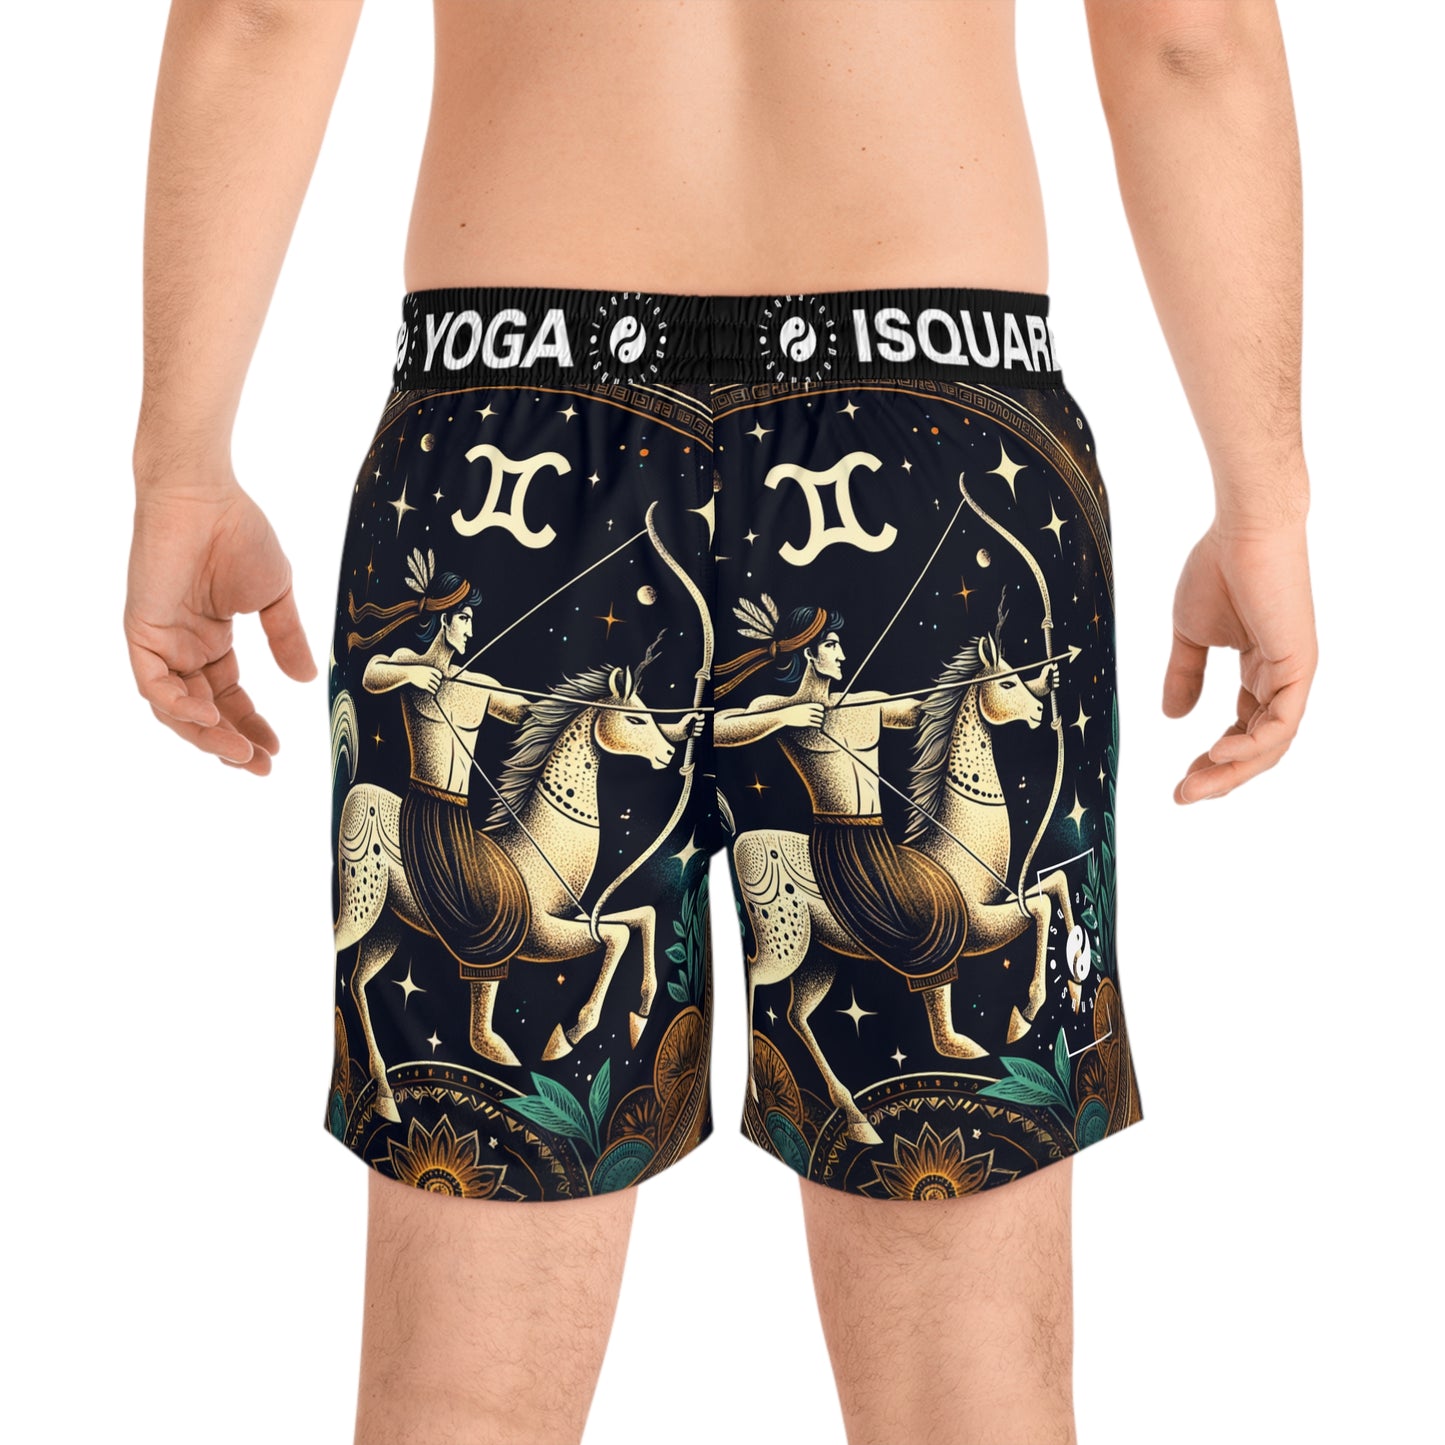 Sagittarius Emblem - Swim Shorts (Mid-Length) for Men